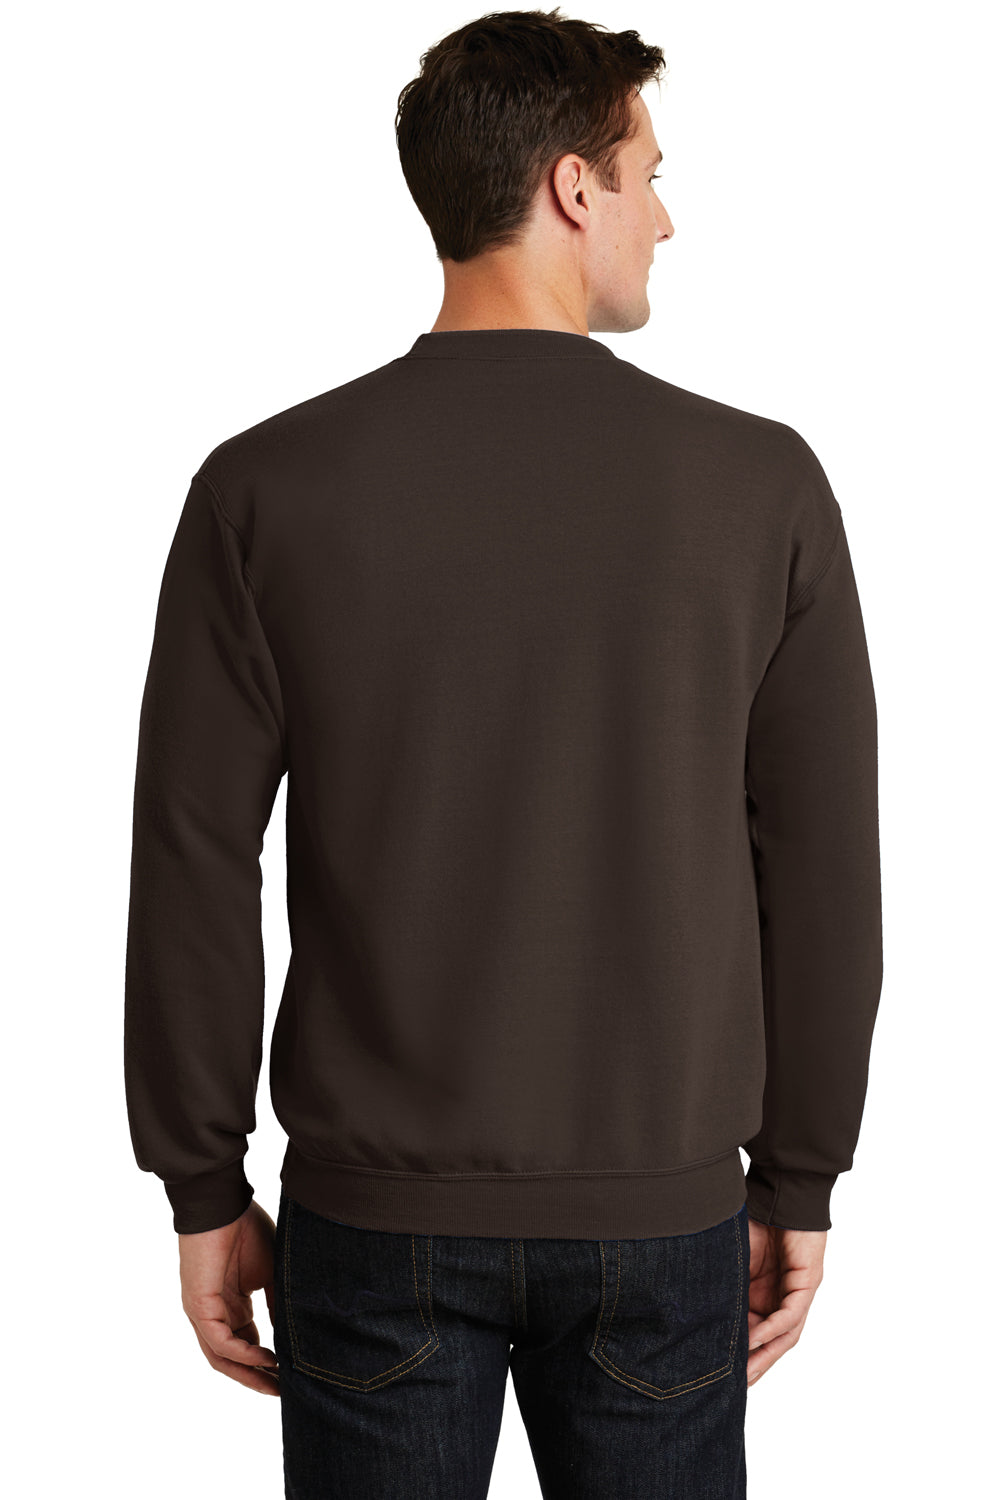 Port & Company PC78 Mens Core Fleece Crewneck Sweatshirt Chocolate Brown Back